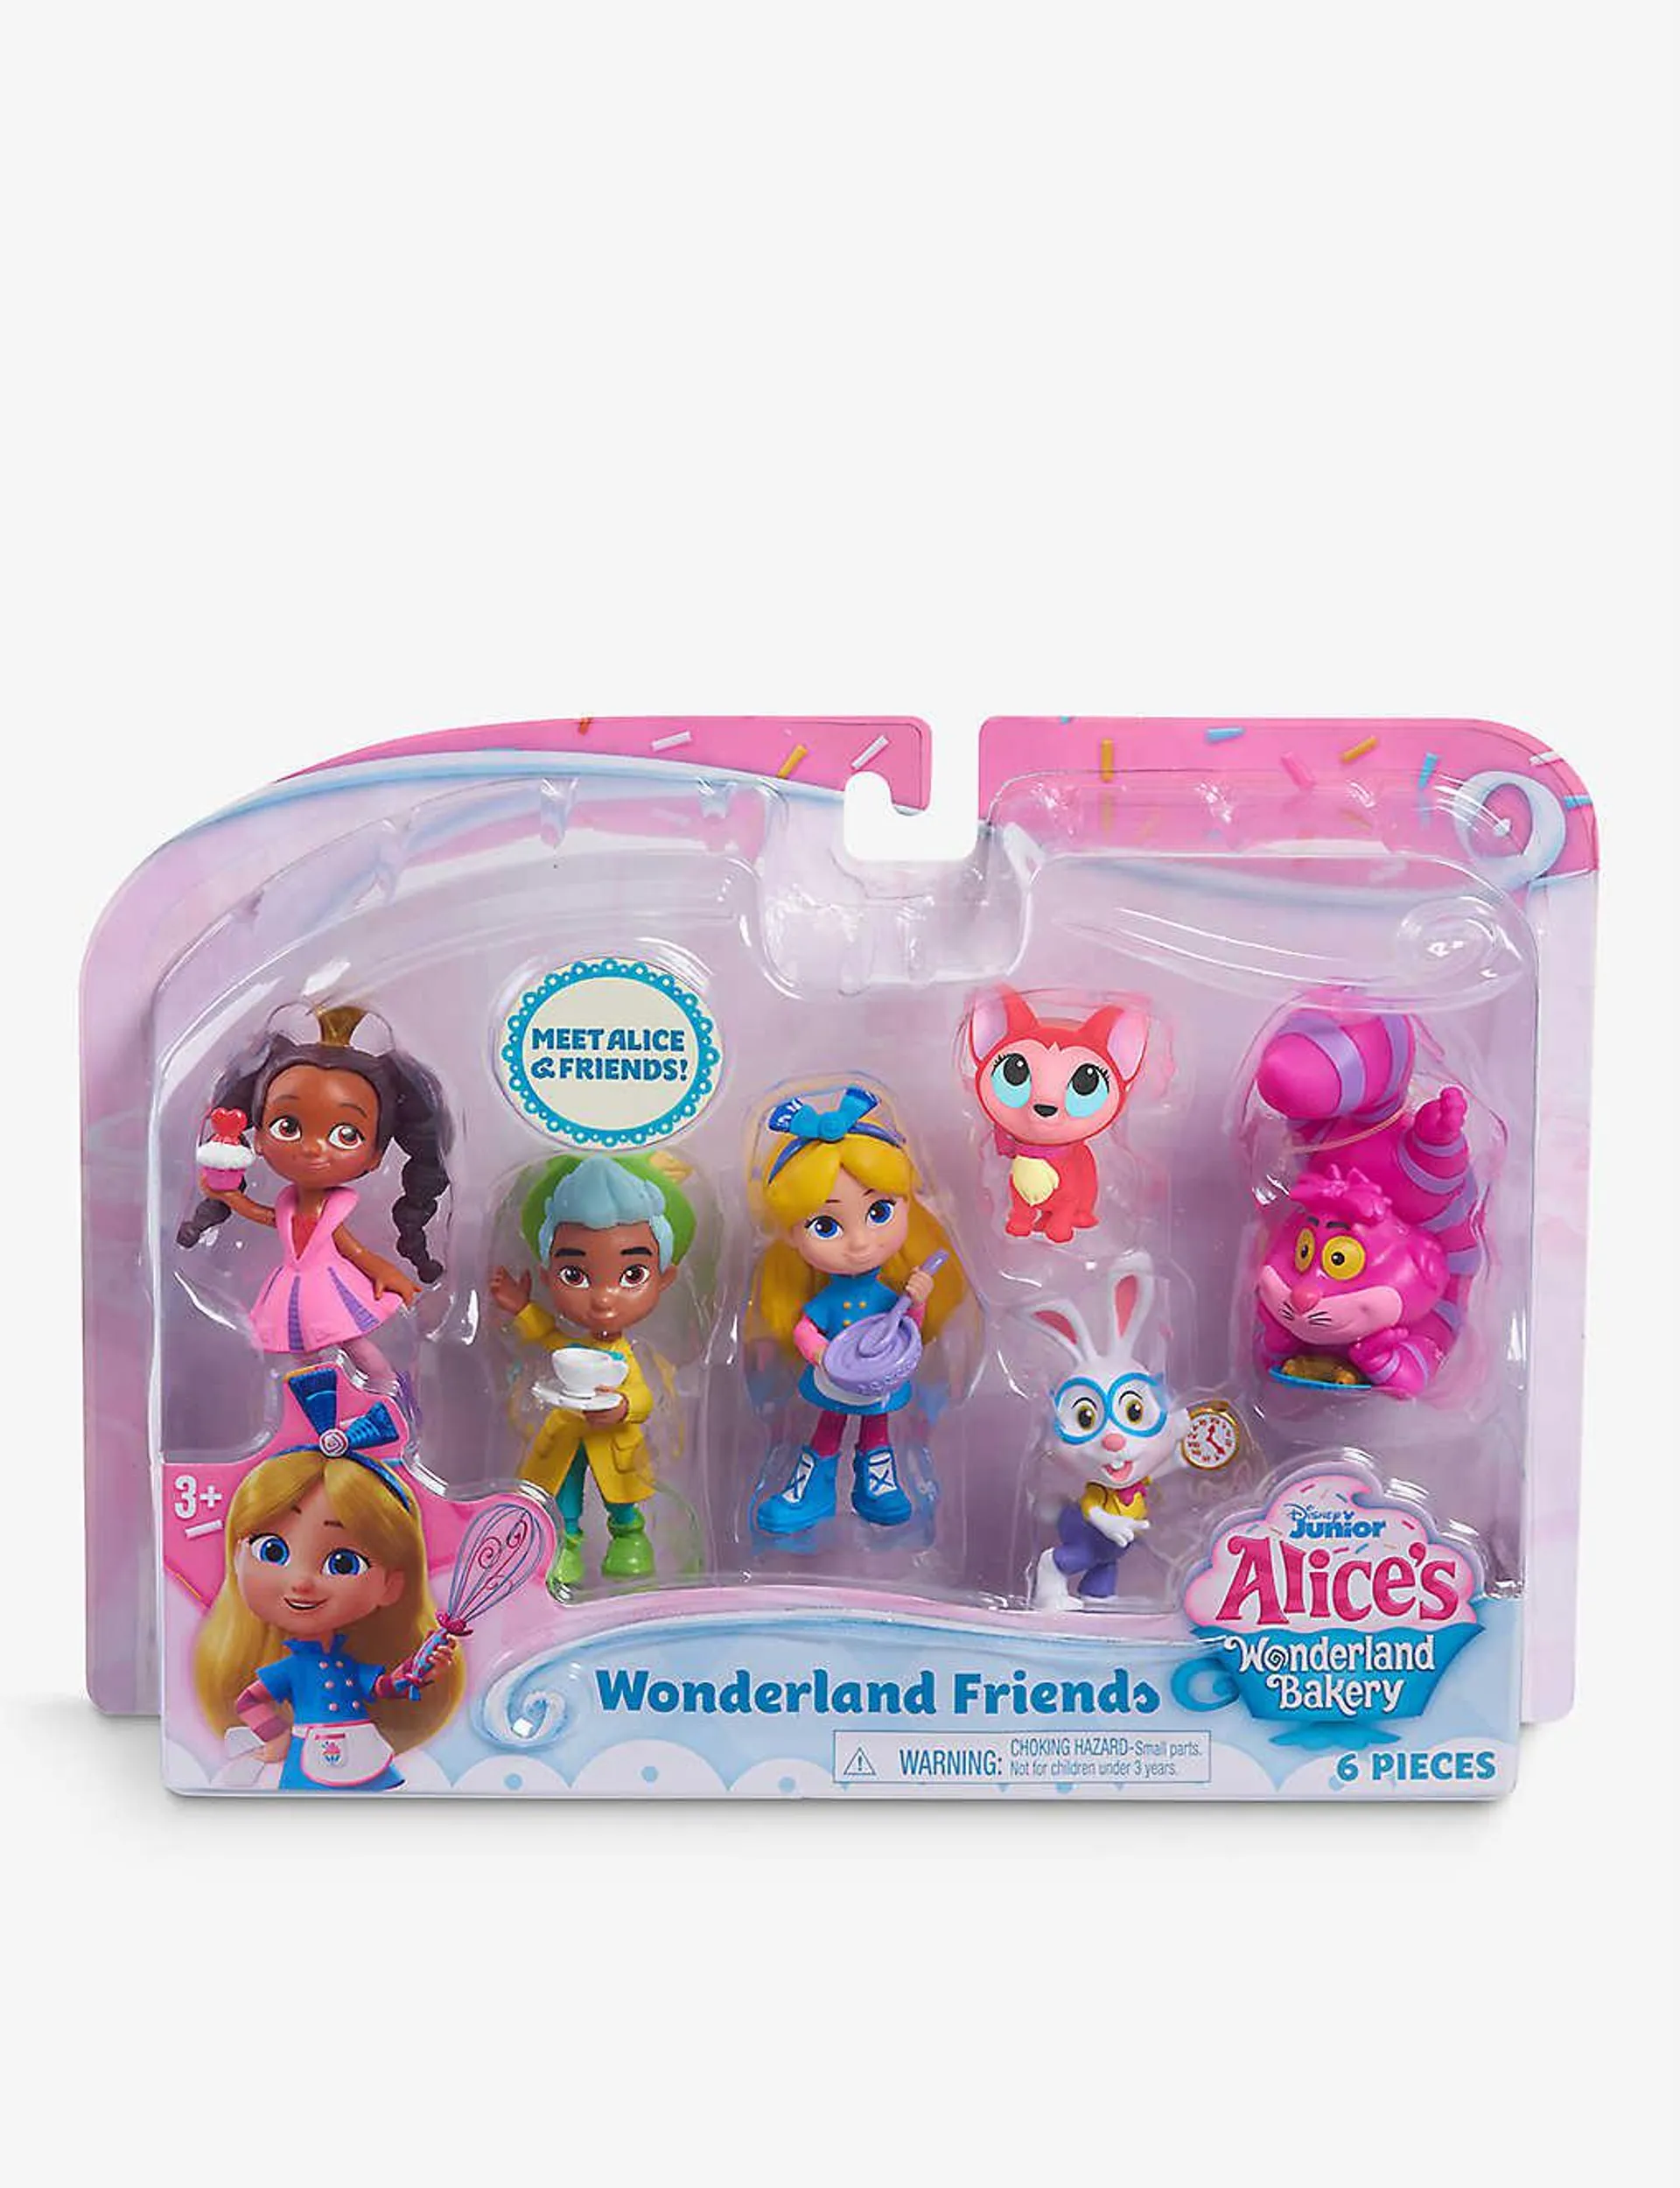 Alice's Wonderland Bakery Friends toy set